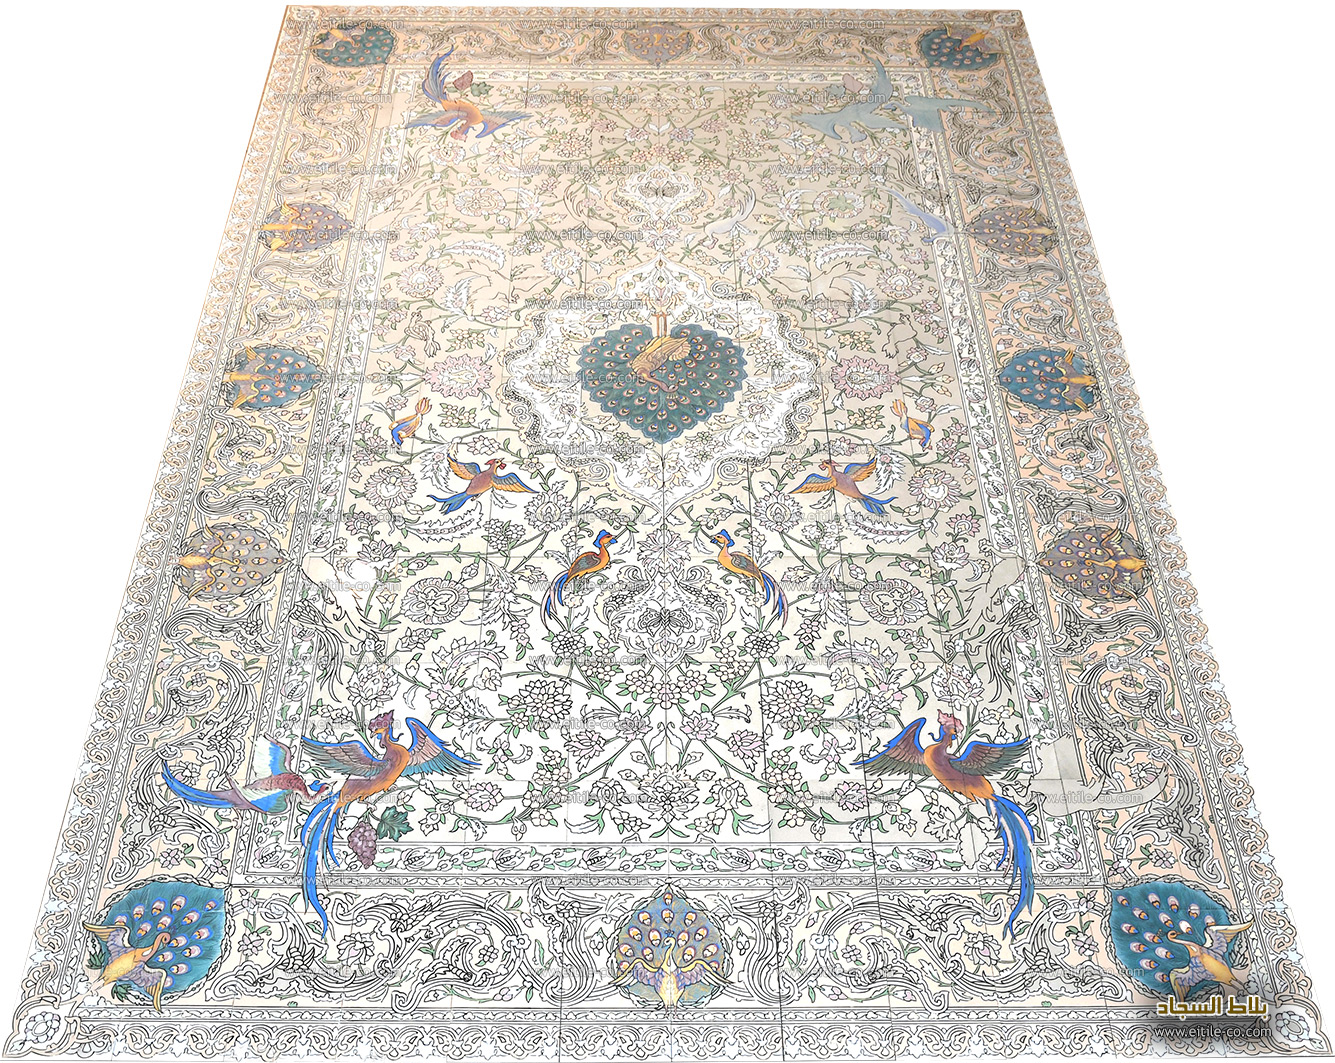 Supplier of handmade floor ceramic with carpet design, www.eitile-co.com